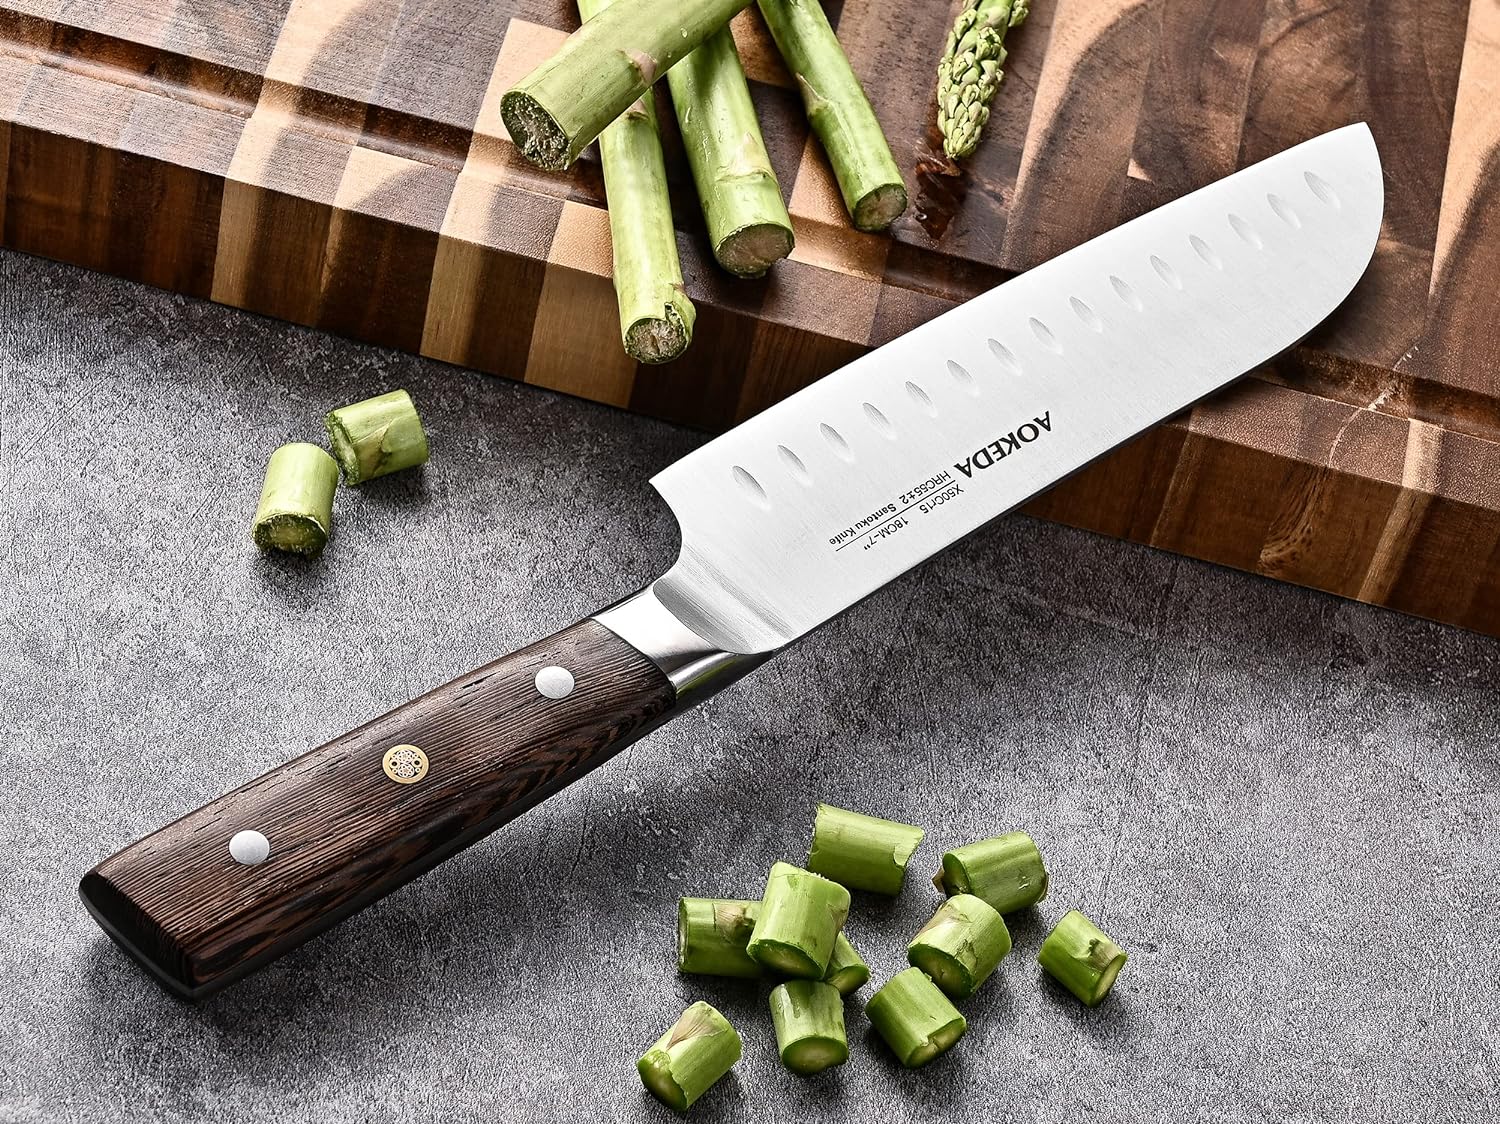 KD 16-Piece Kitchen Knife Set with Block German Steel